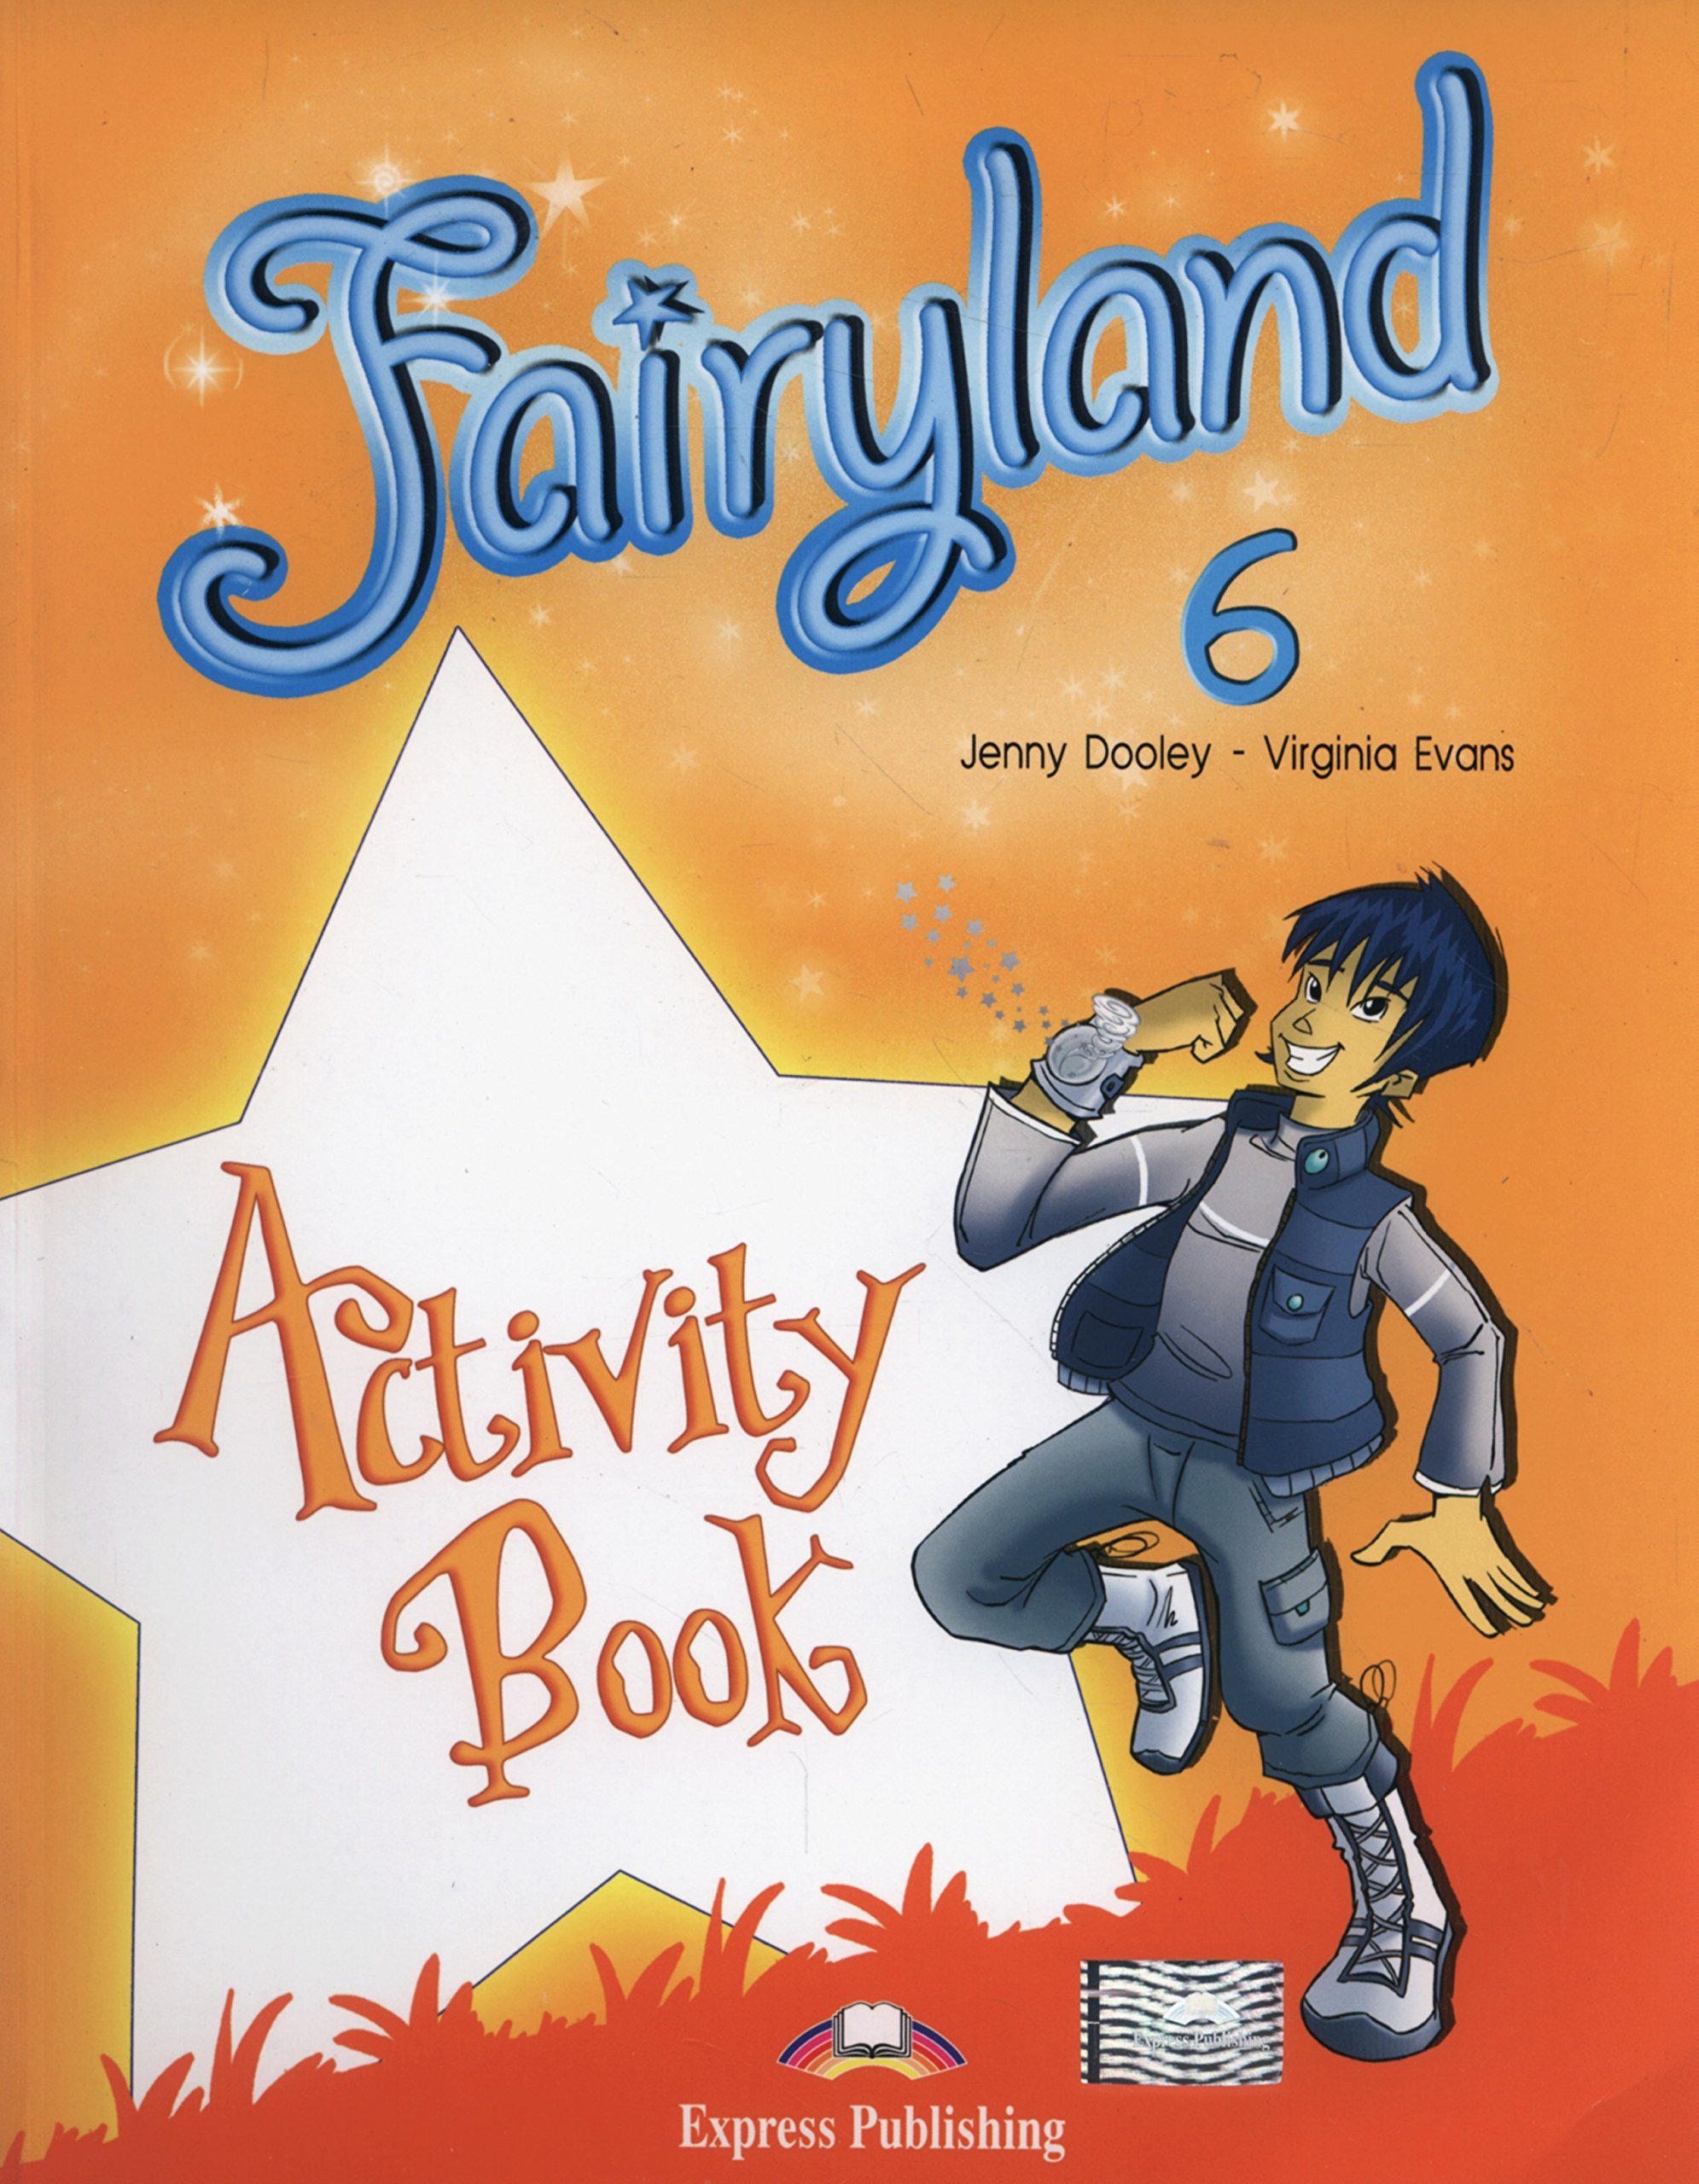 FAIRYLAND 6 Activity Book